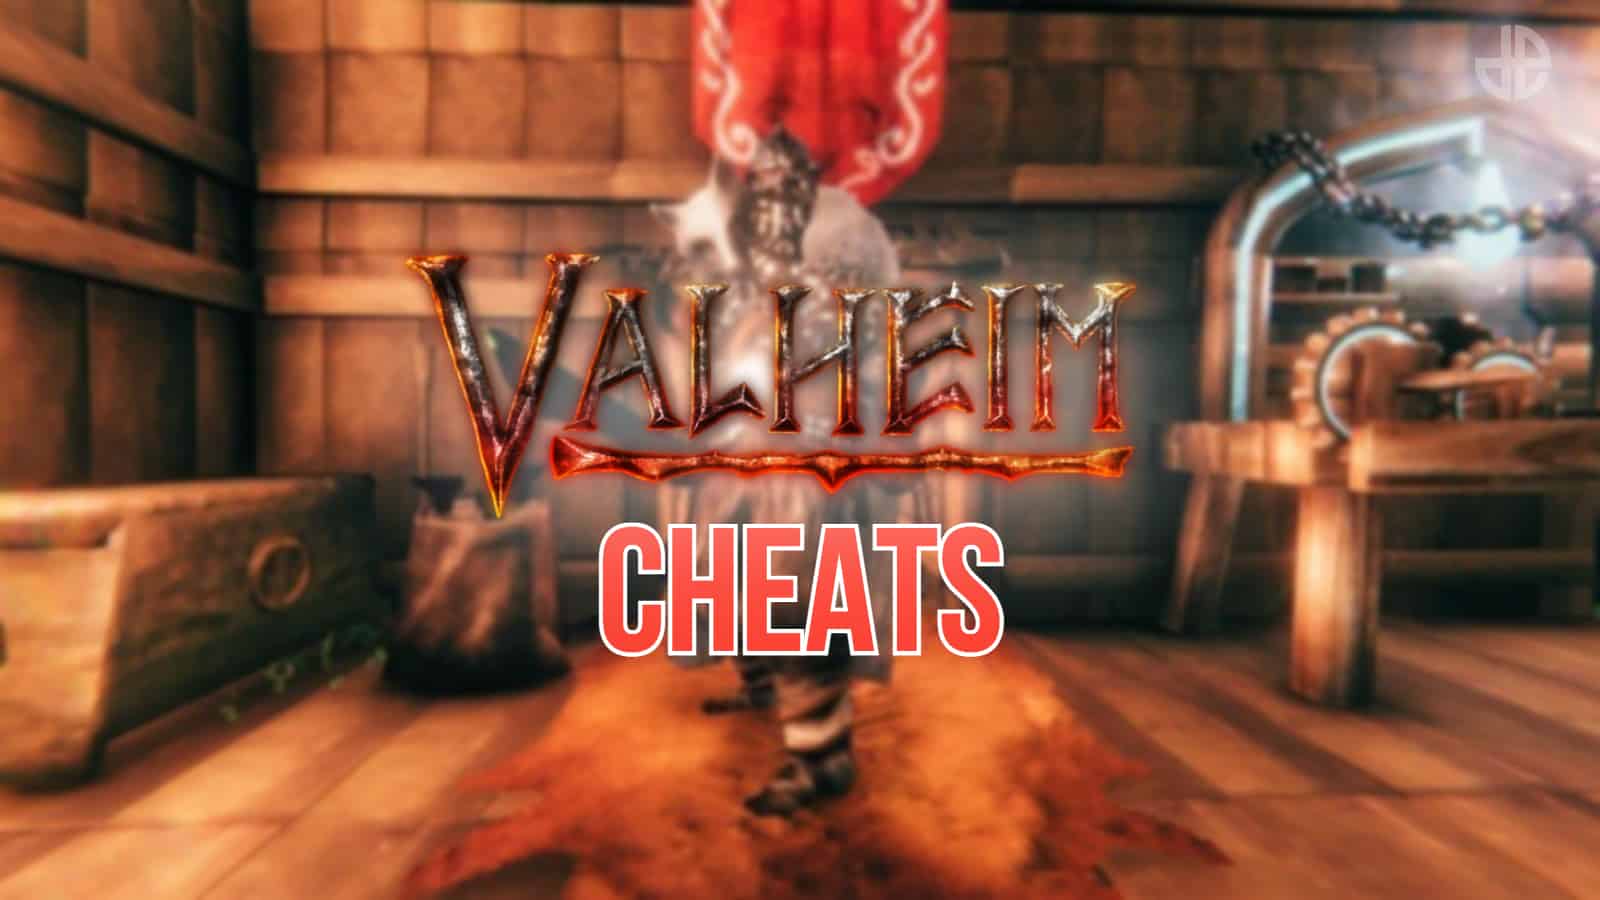 valheim cheats console commands guide image